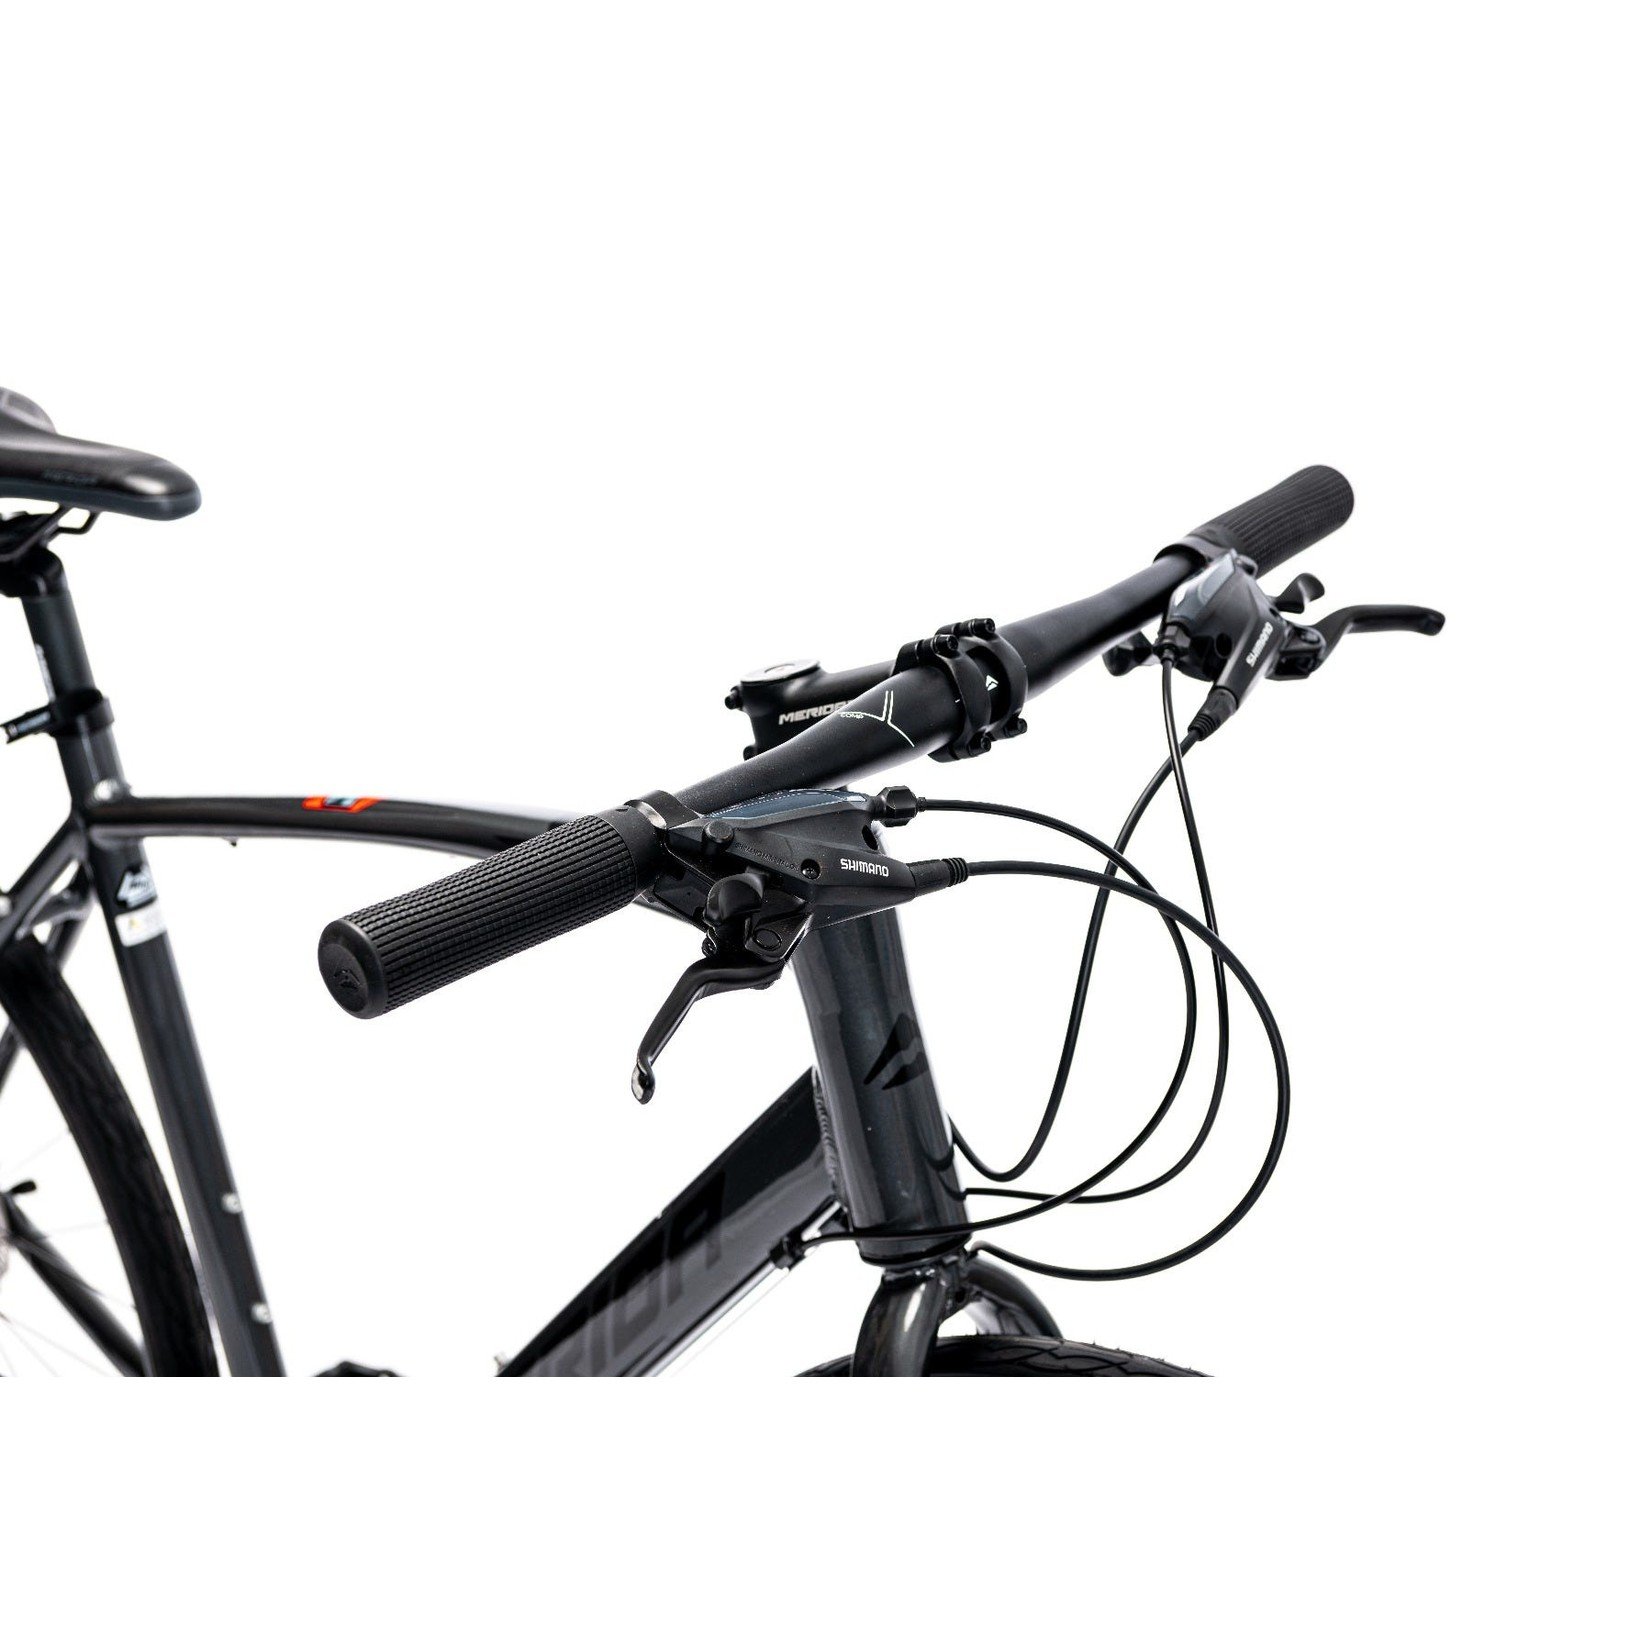 Merida Merida 2021 Speeder 20 Flat Bar Road Bike - Anthracite(Black) - Small/Medium(52cm)